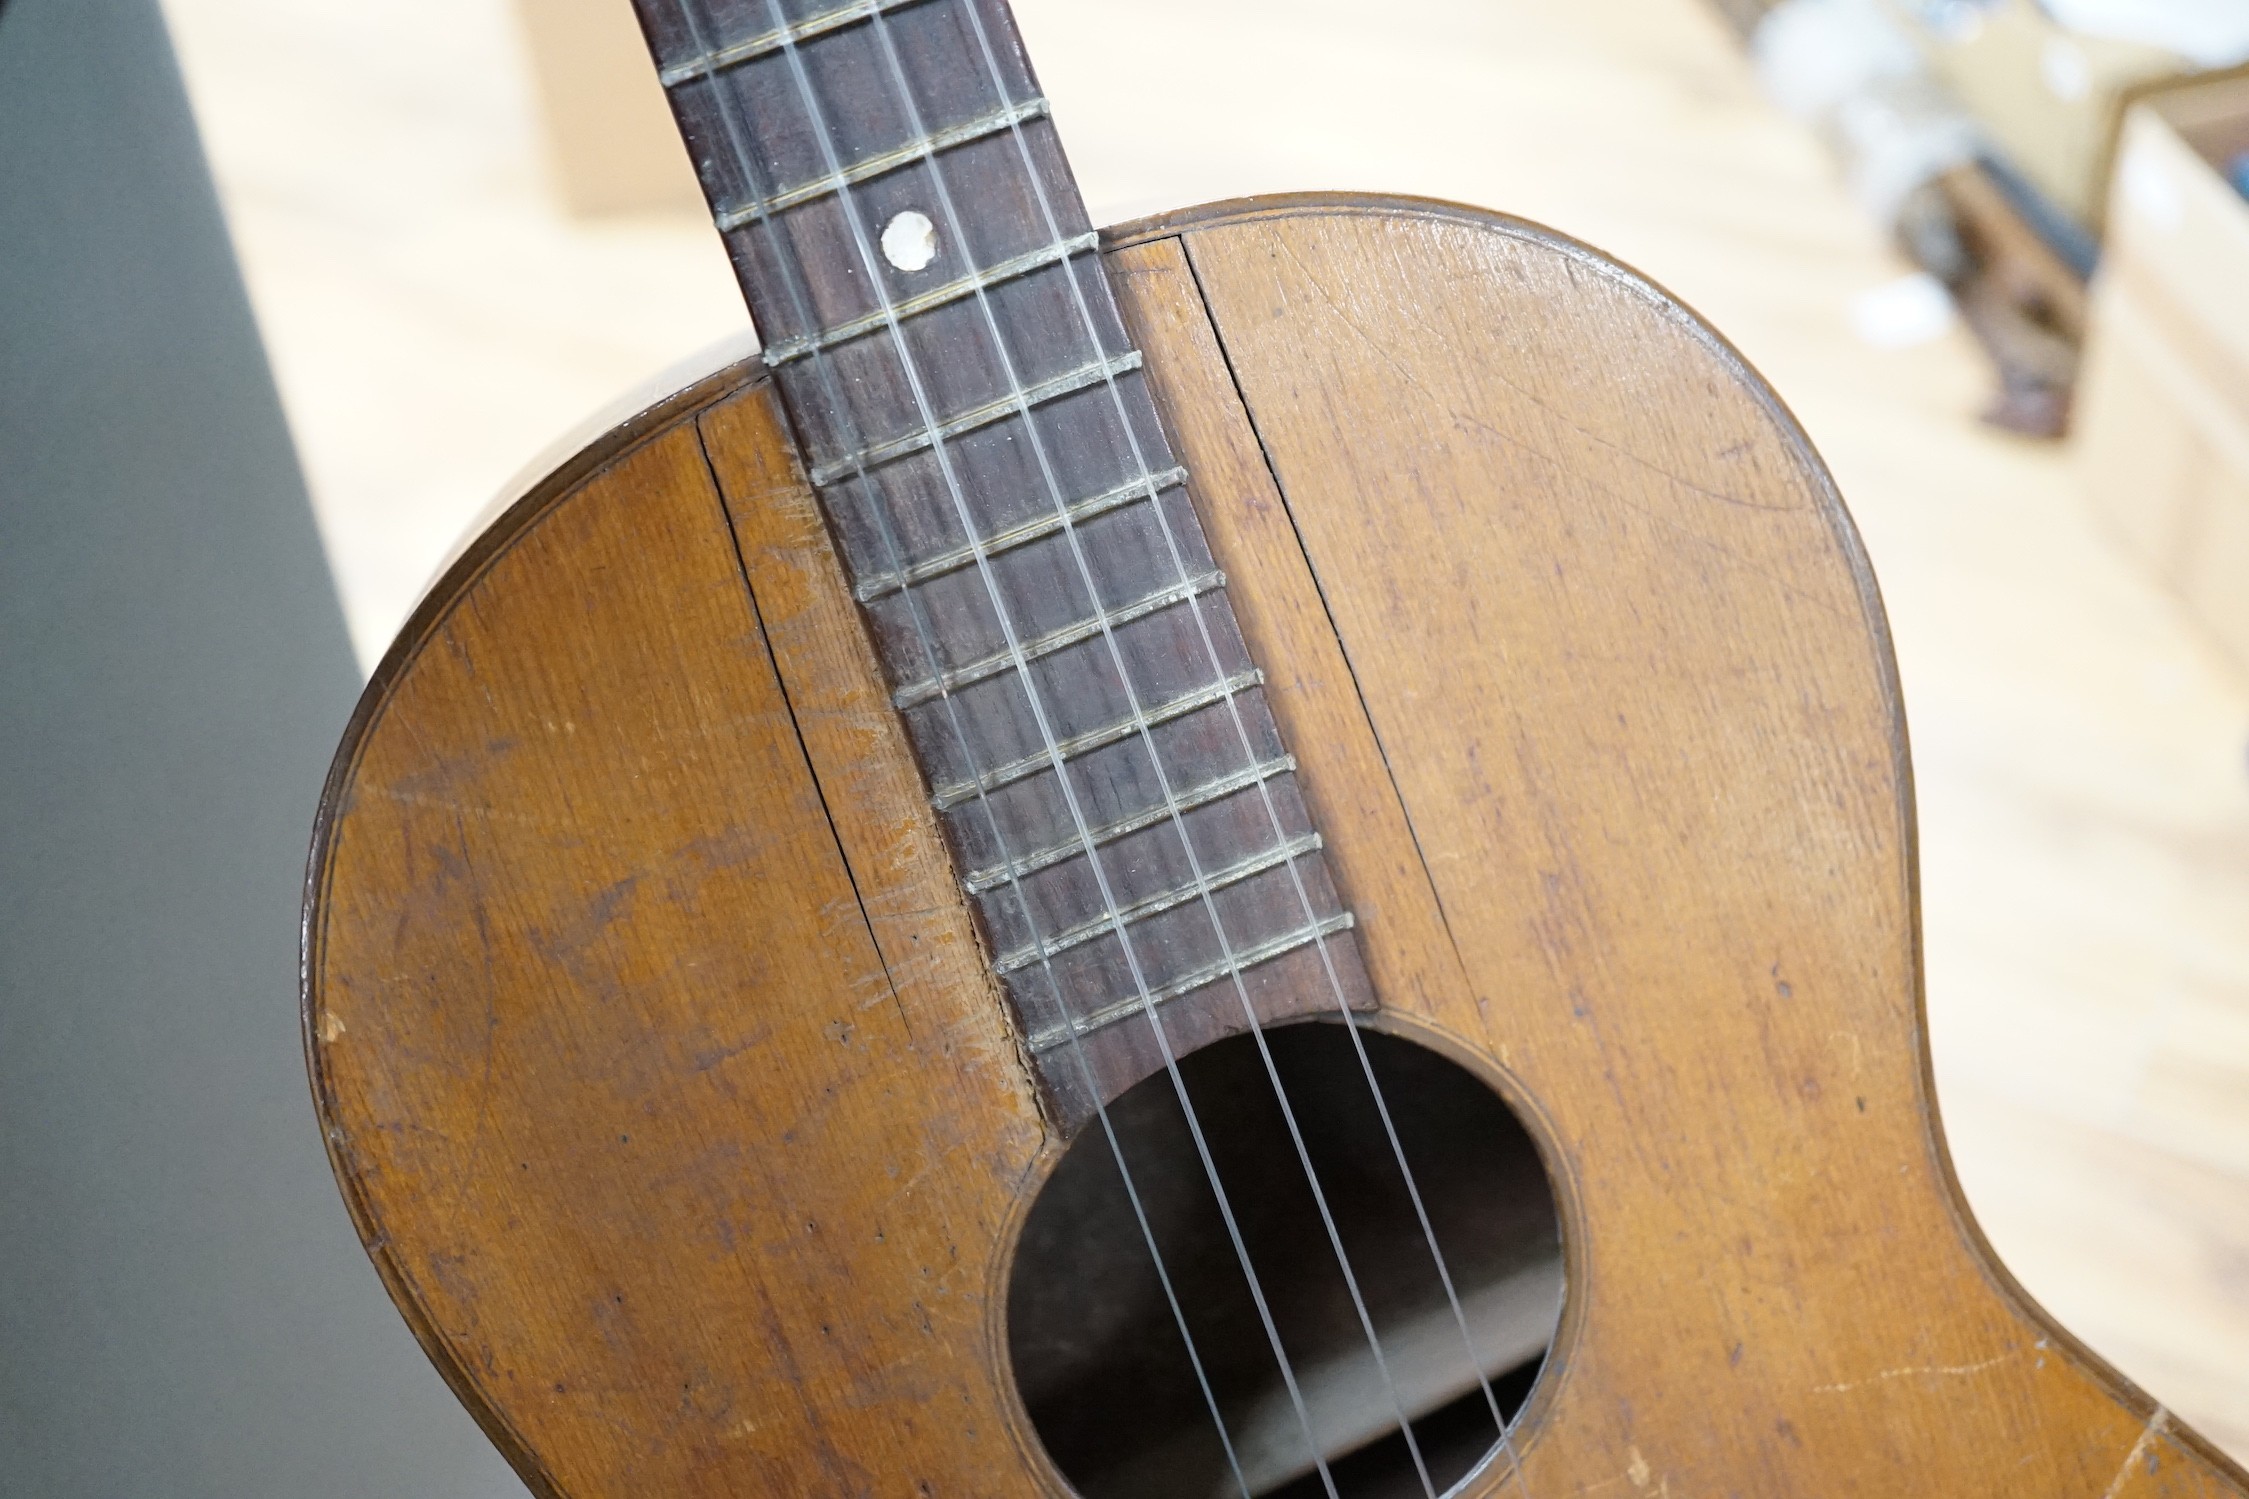 A four string banjo style parlour guitar